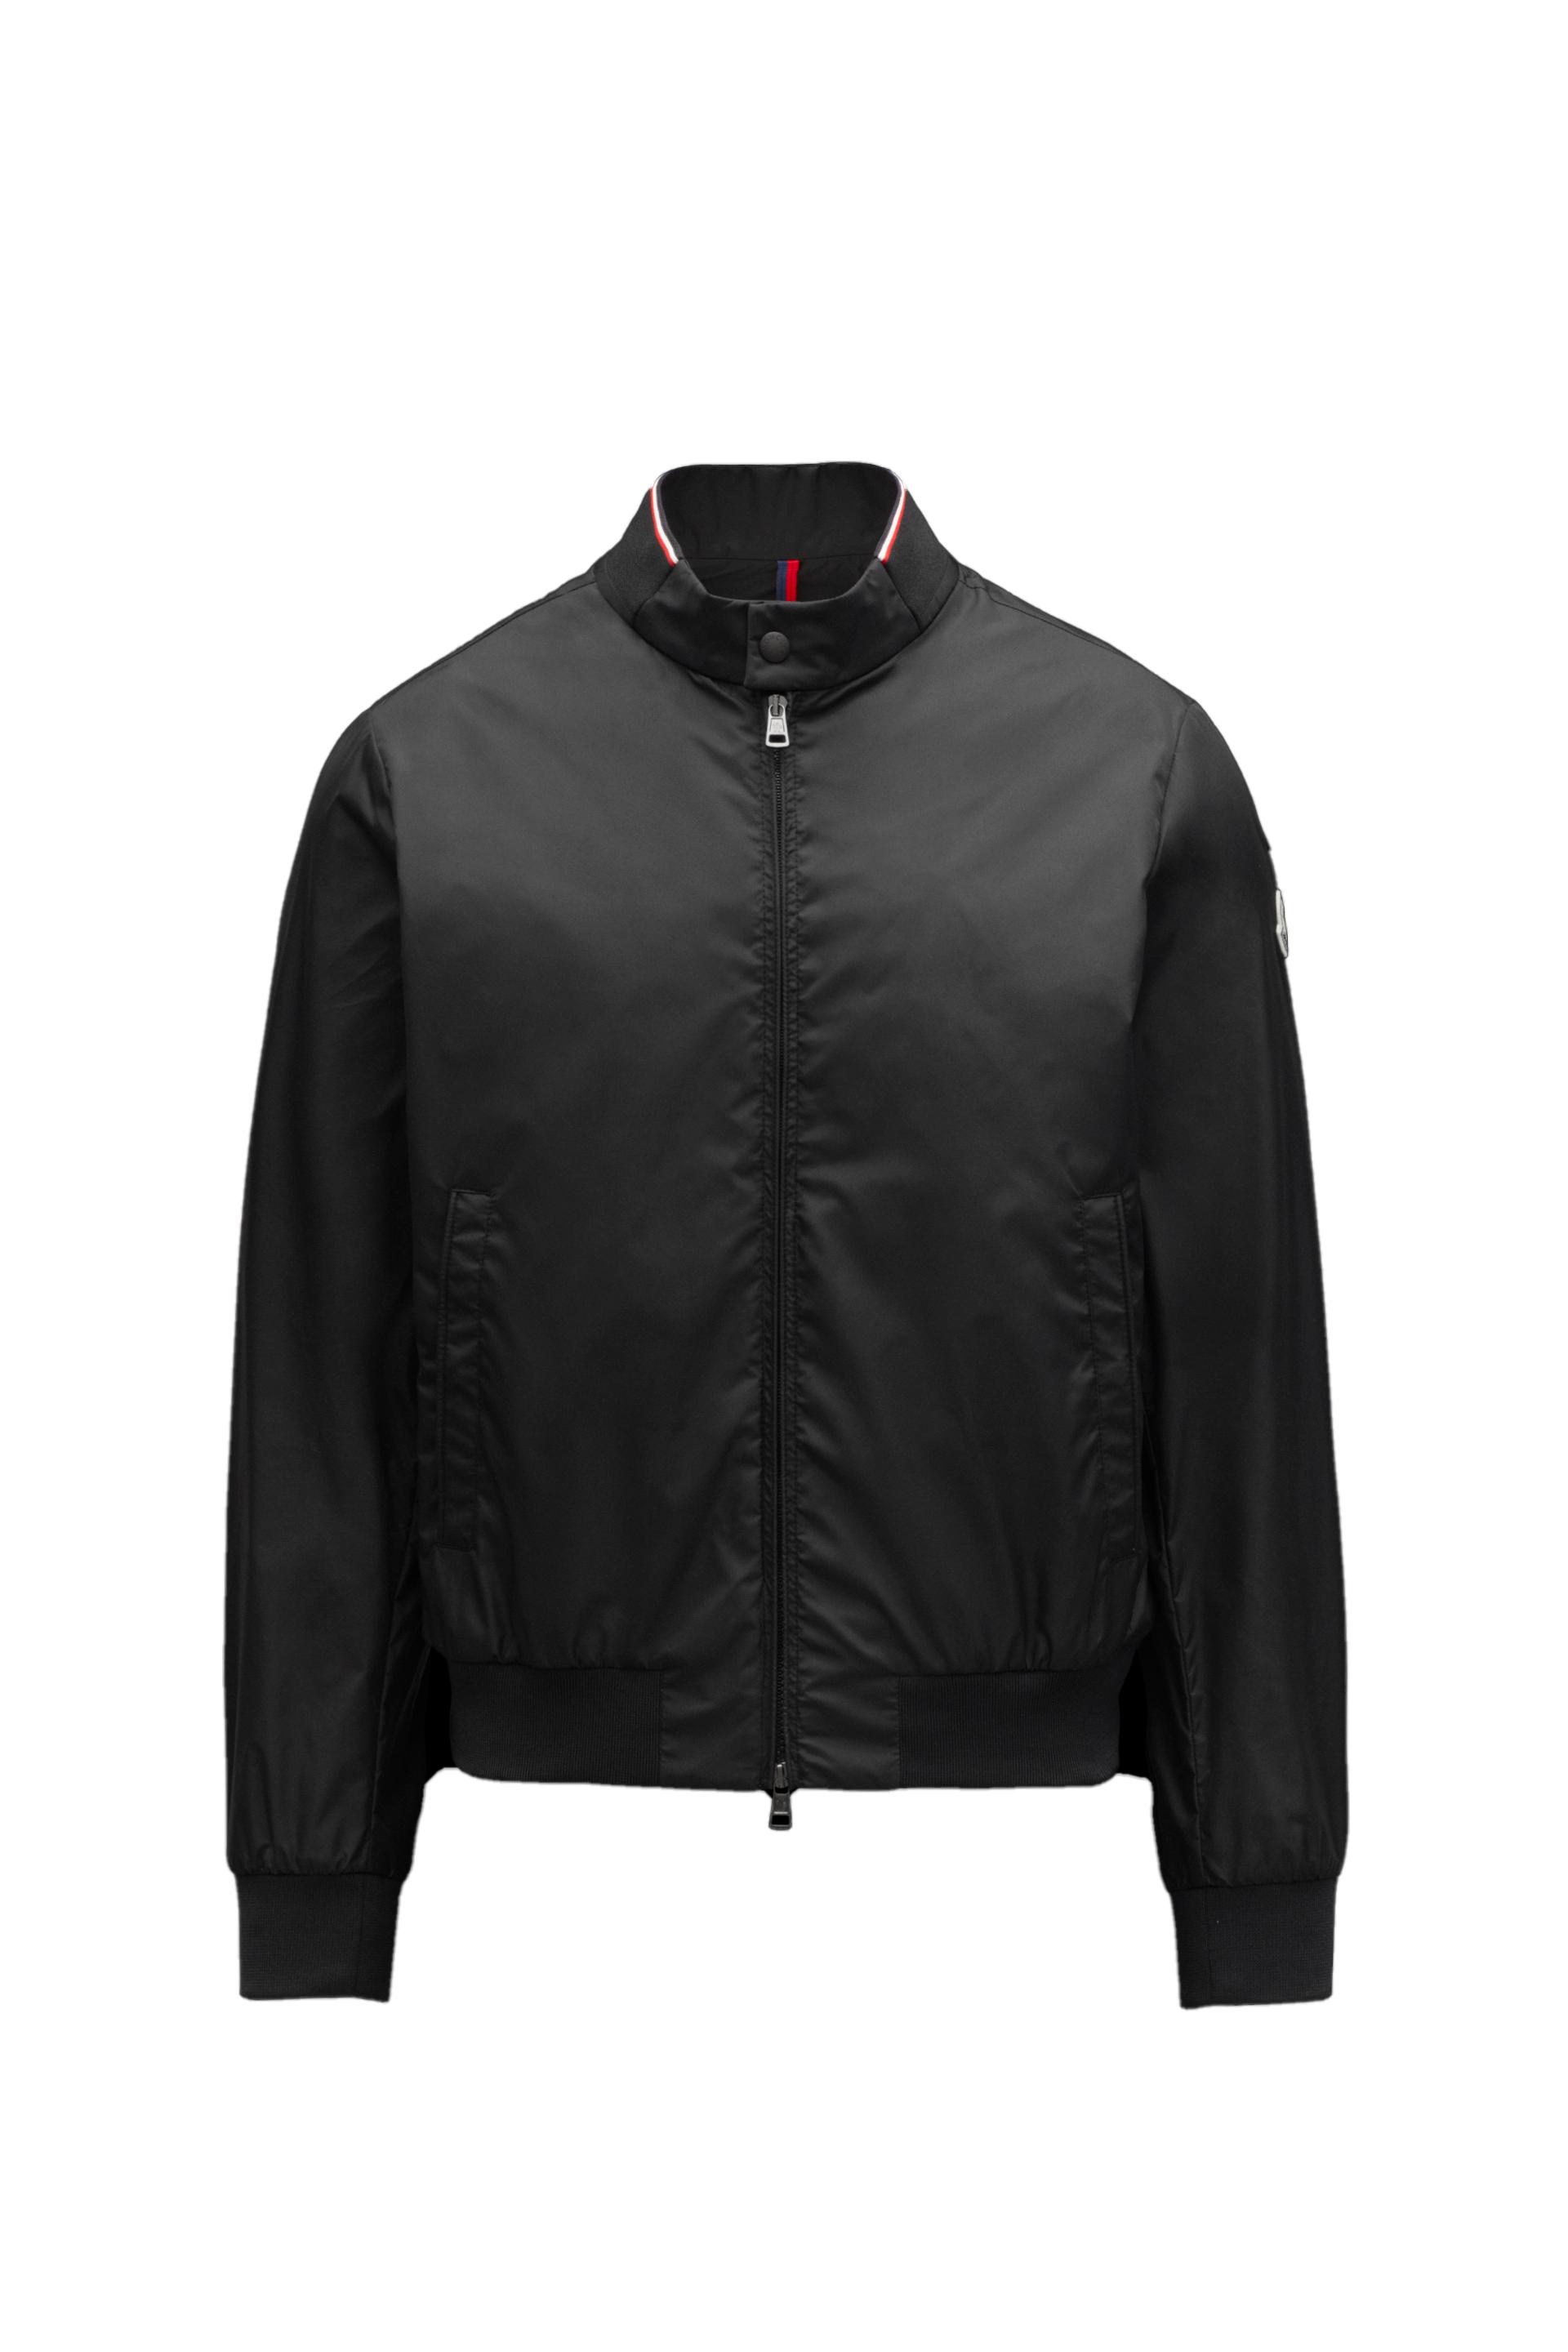 Moncler Reppe Rain Jacket in Black for Men | Lyst